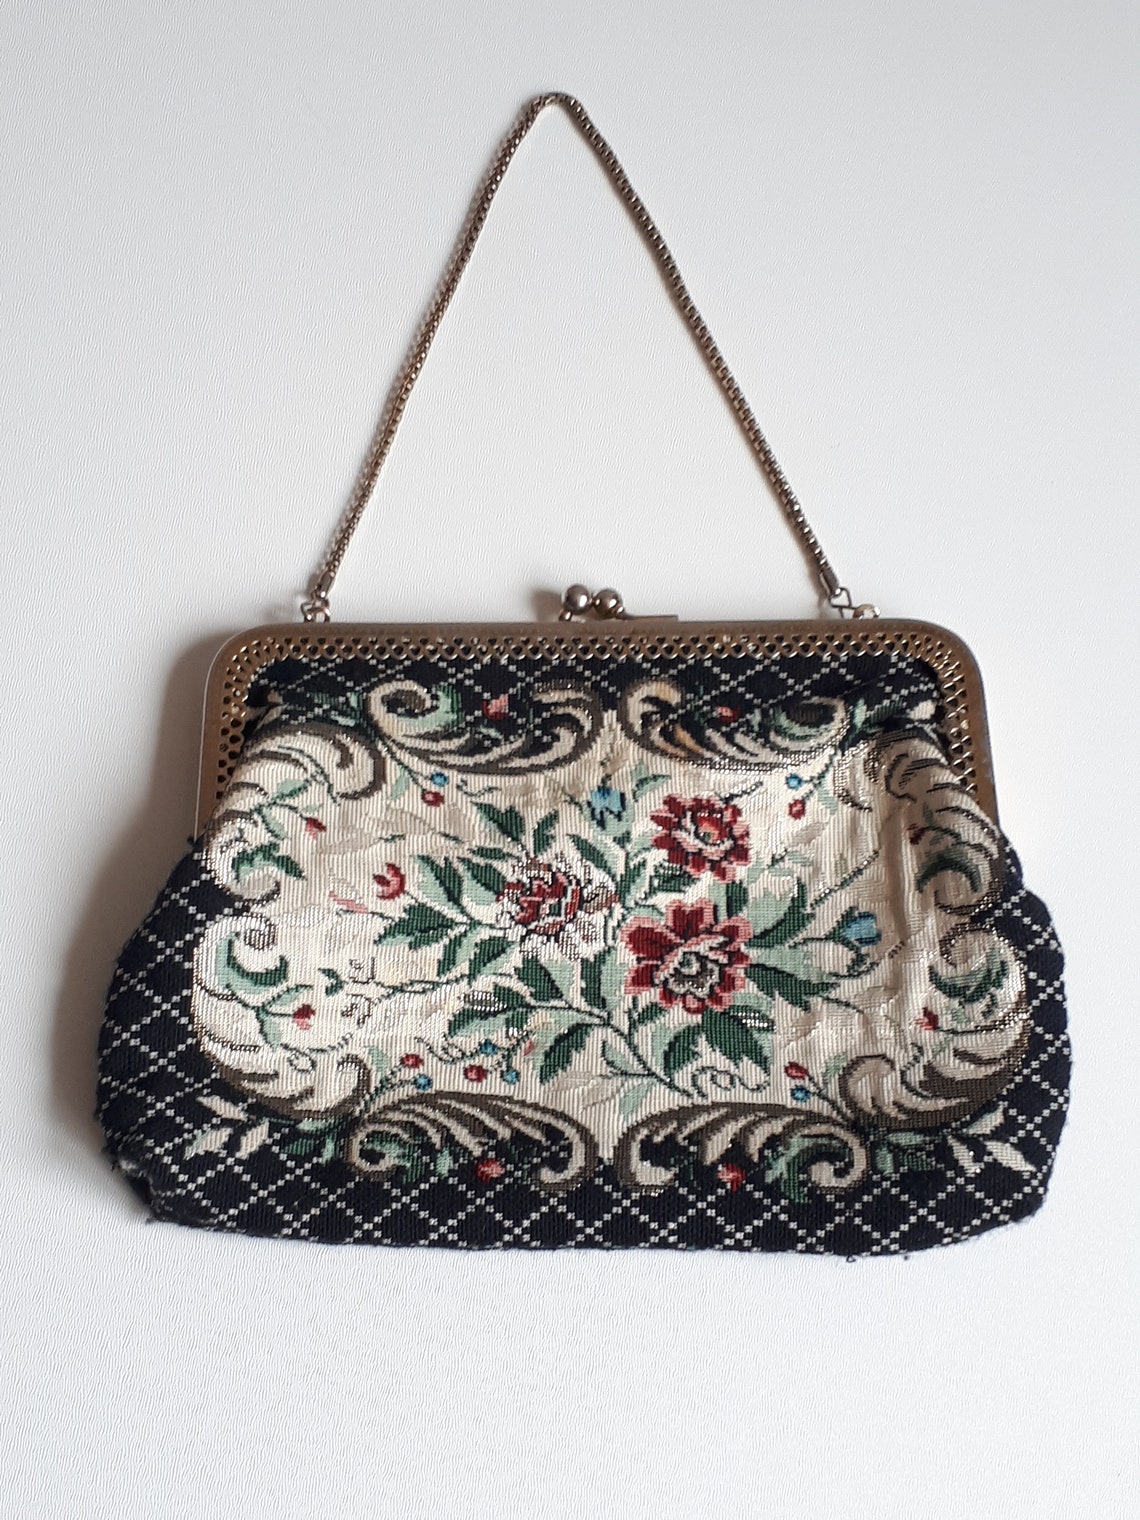 Vintage tapestry women's handbag of the last century | Etsy